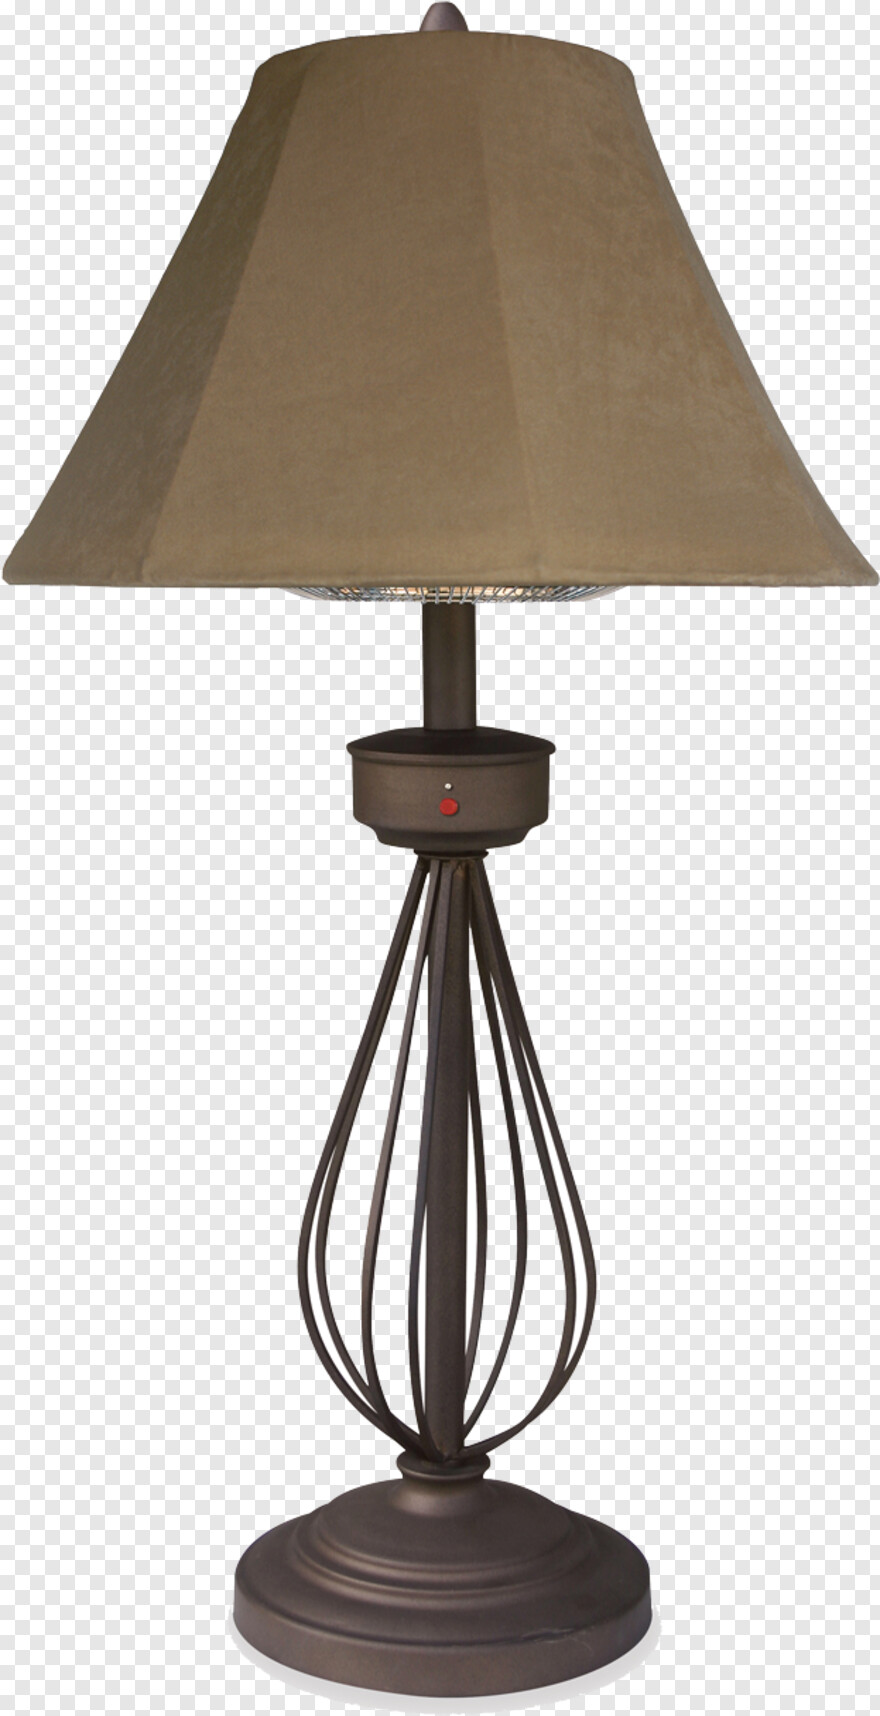 street-lamp # 817959